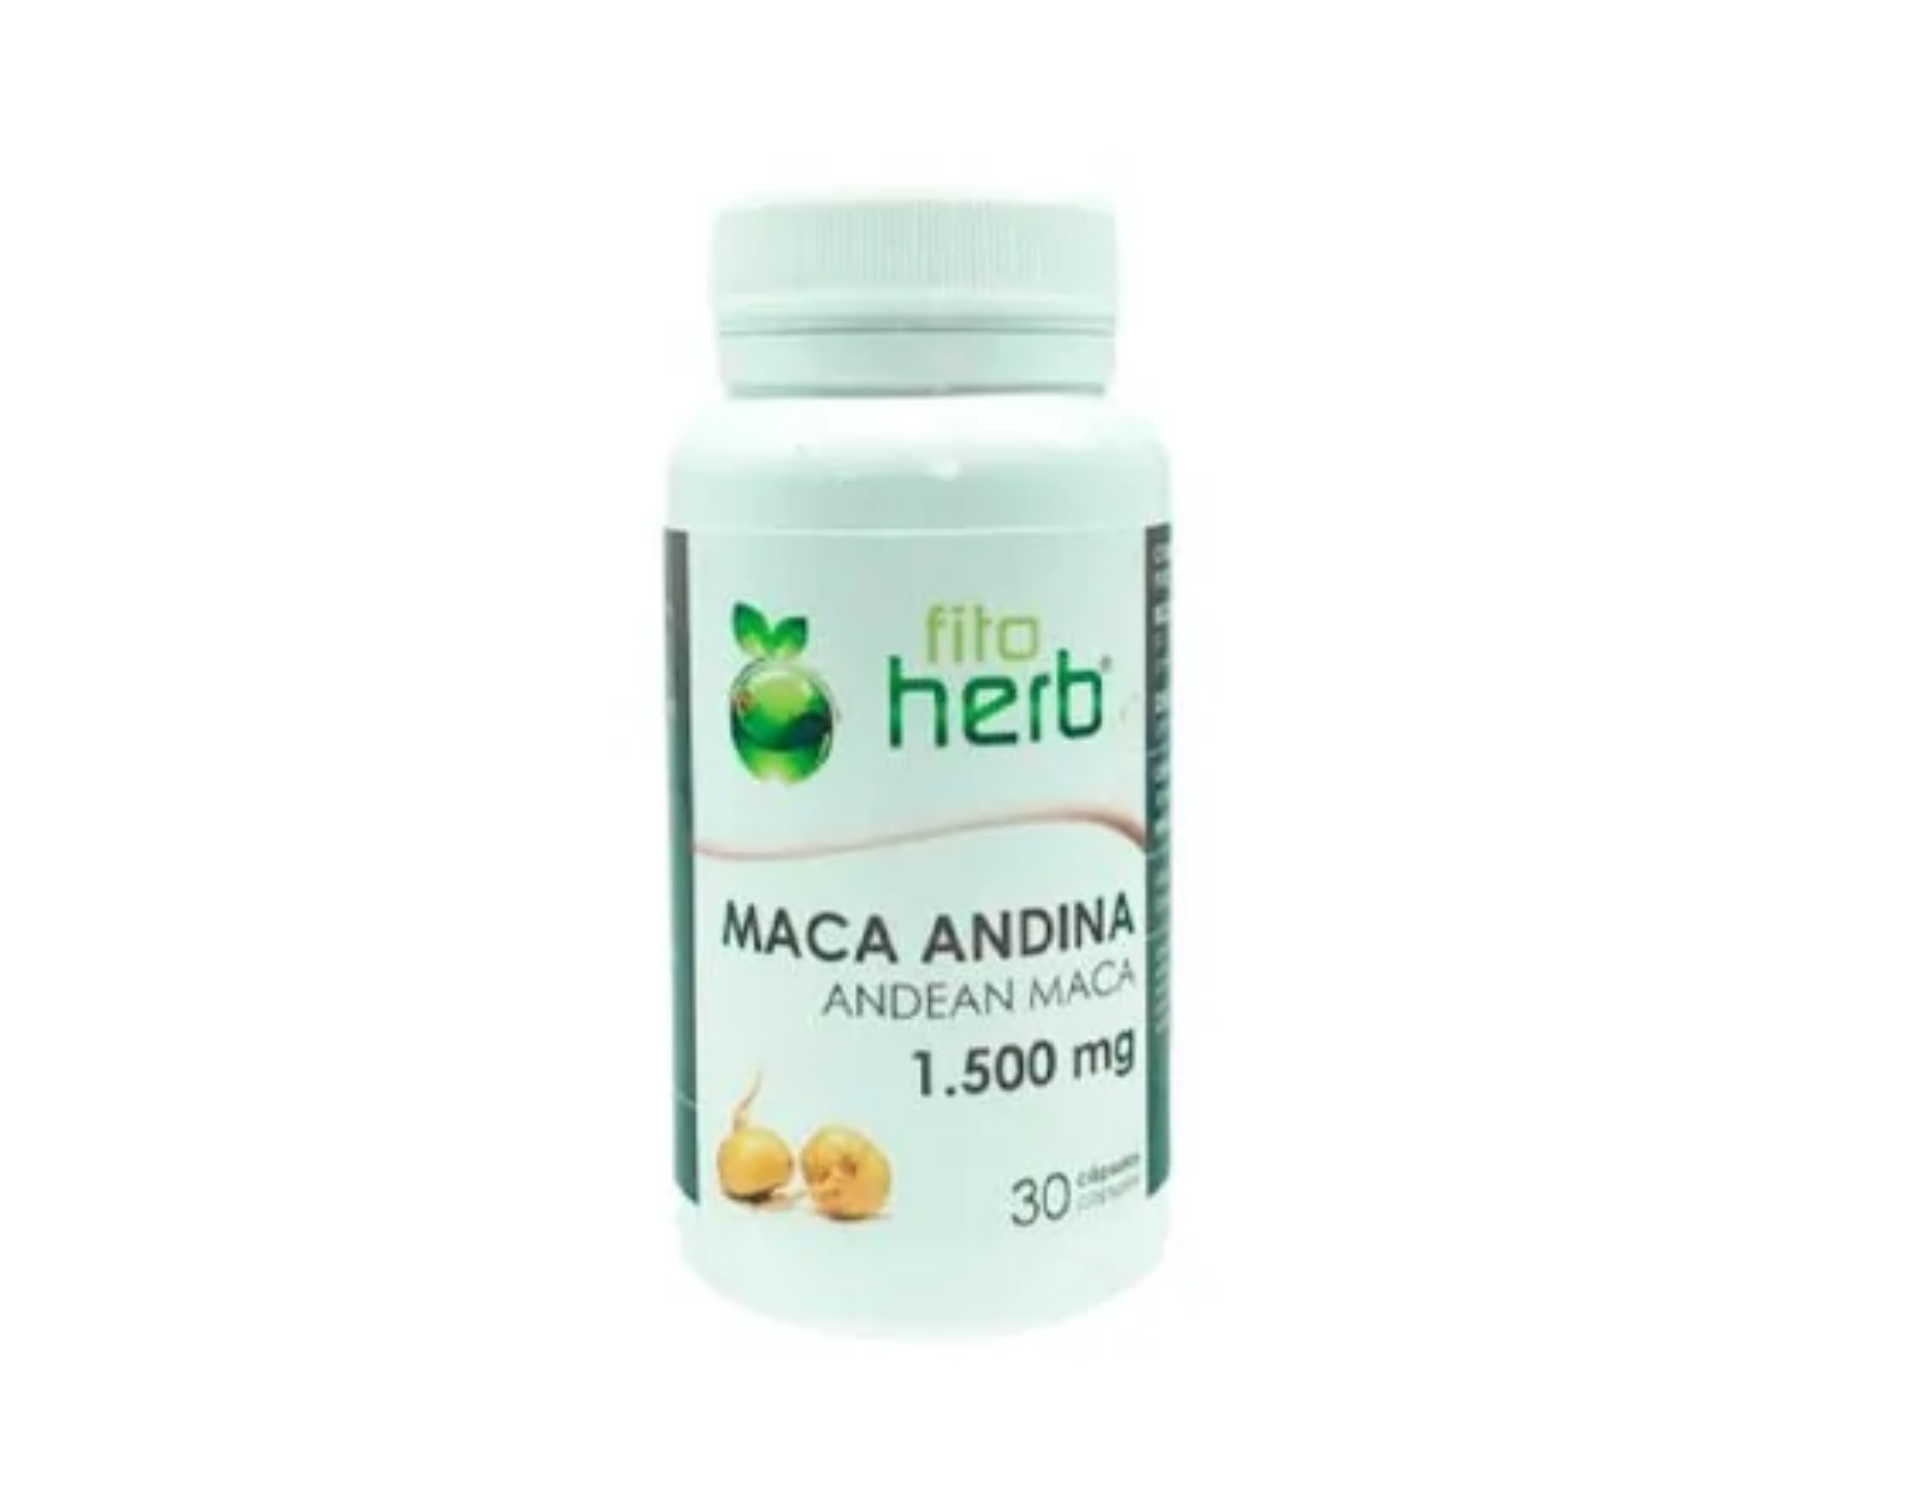 Maca Andina - Fito Herb